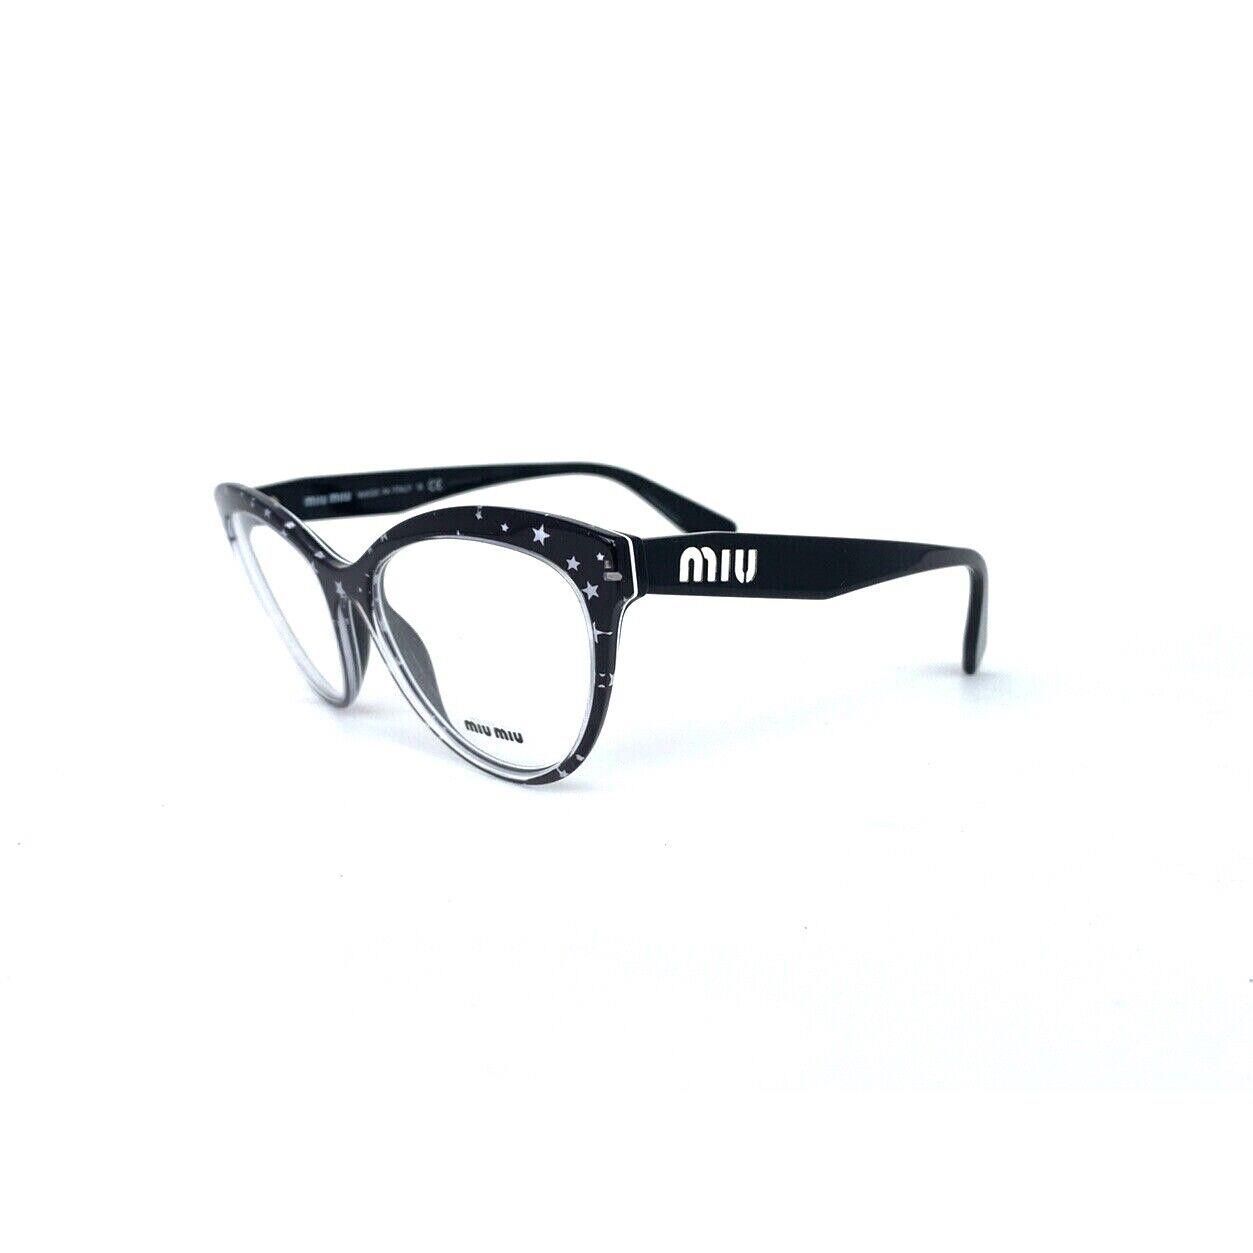 Miu Miu eyeglasses VMU - Black Frame 8